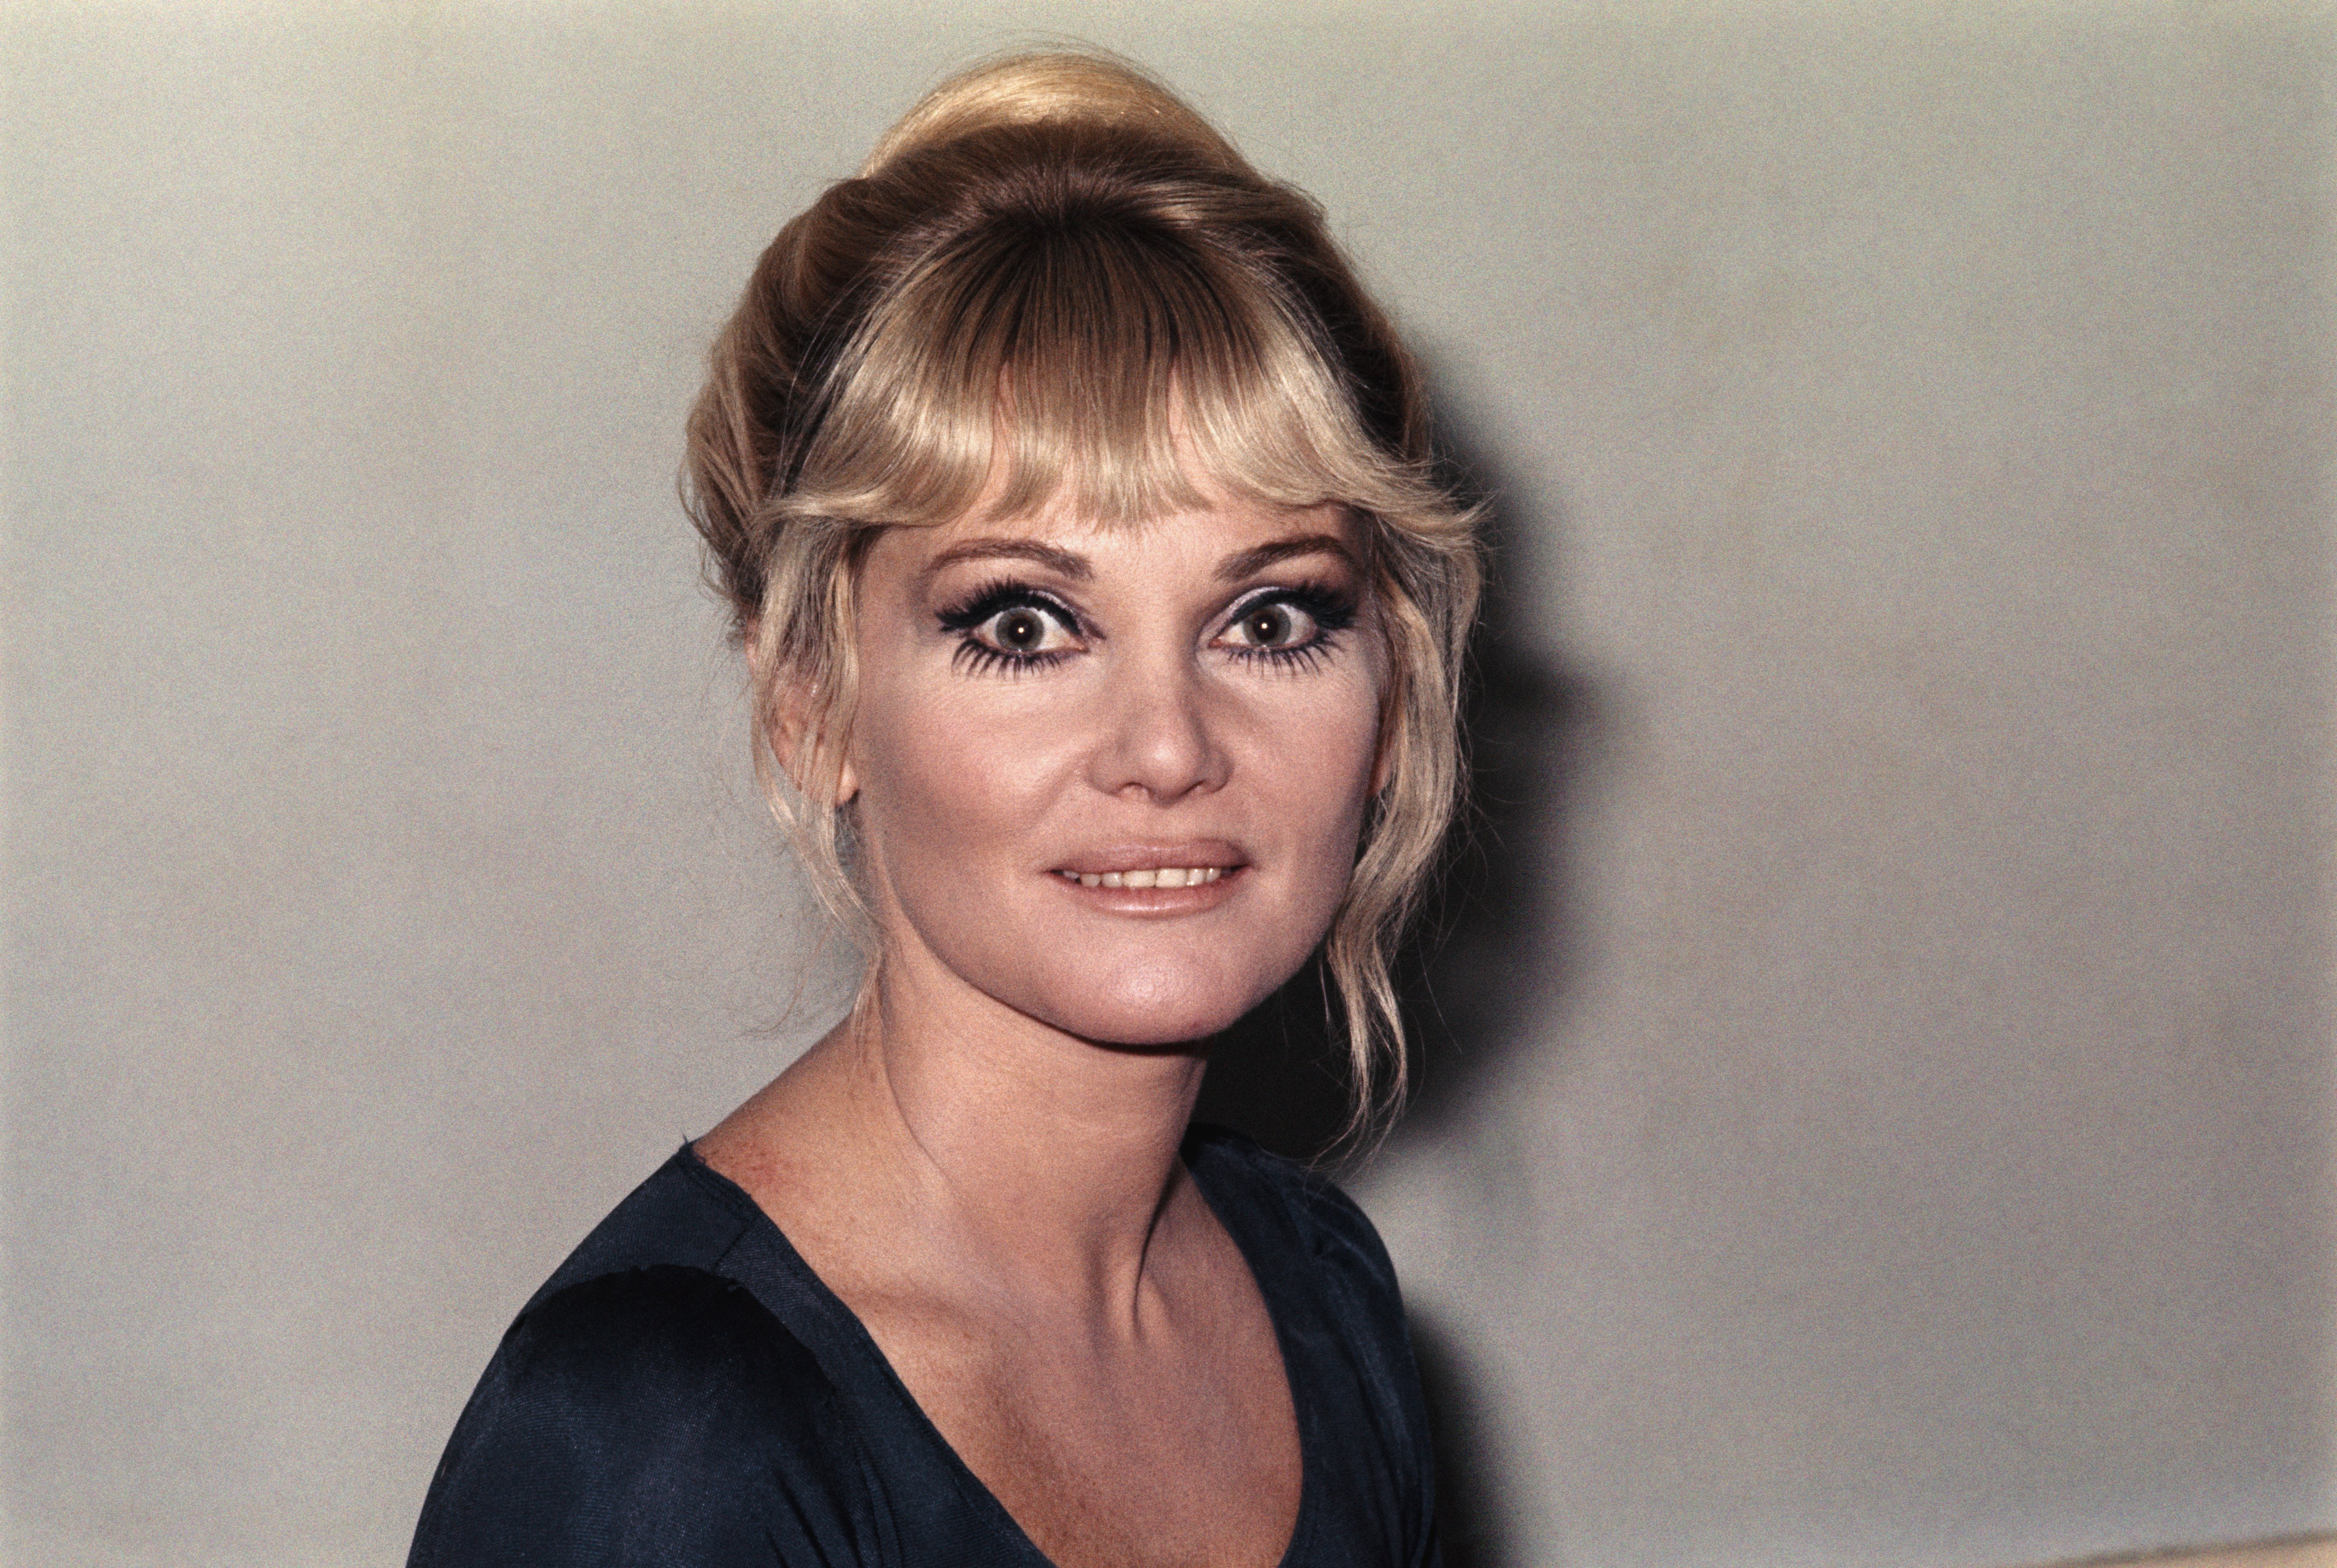 Diane Cilento in London am 28. Oktober 1969 | Quelle: Getty Images